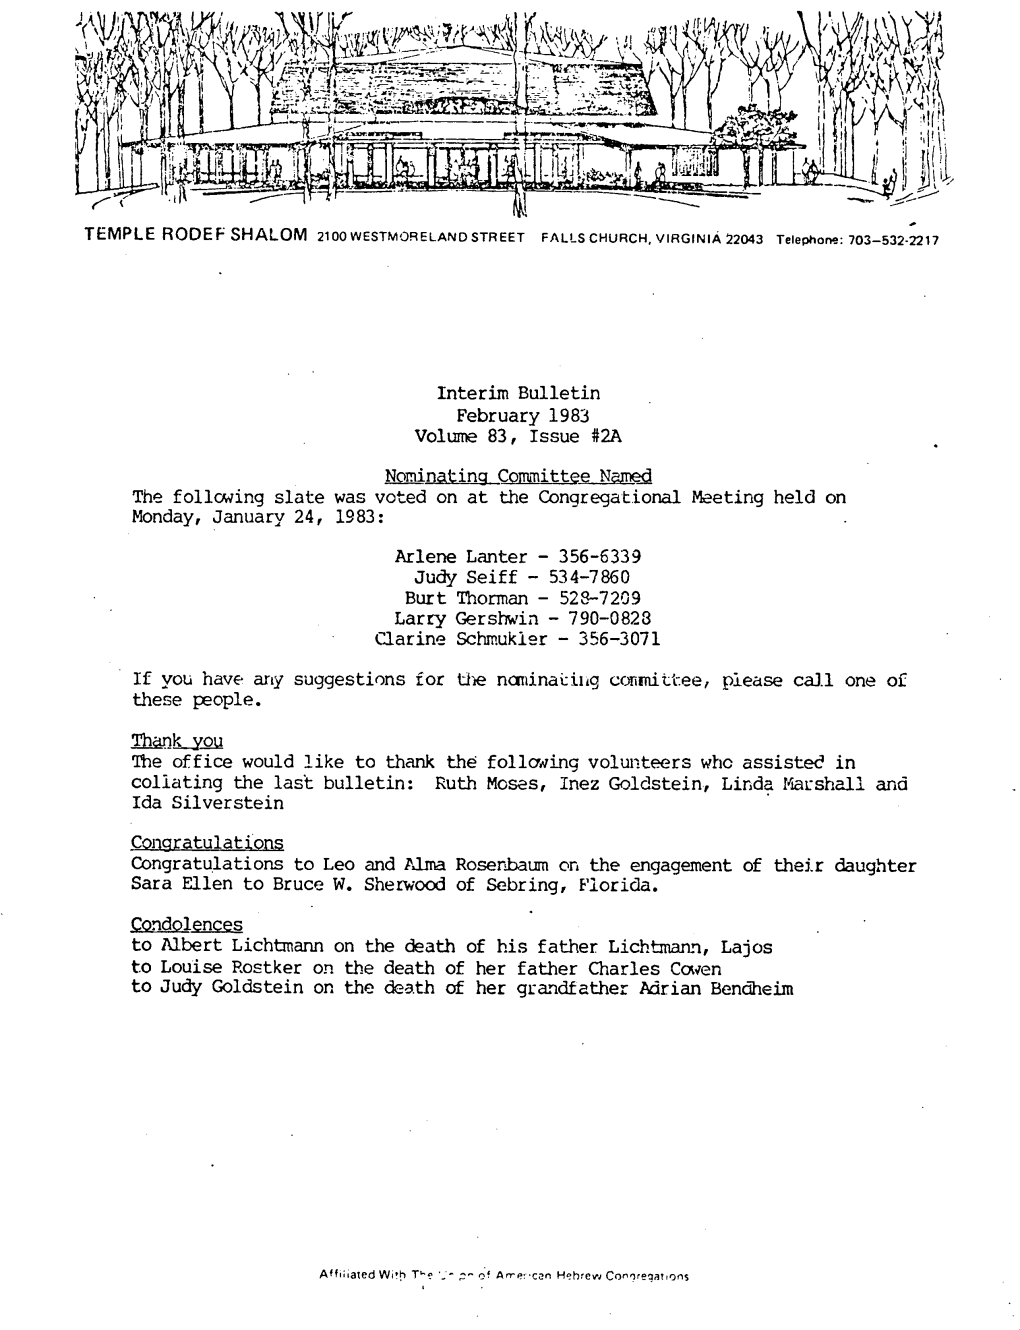 Interim Bulletin February 1983 Volume 83, Issue #2A Nominating